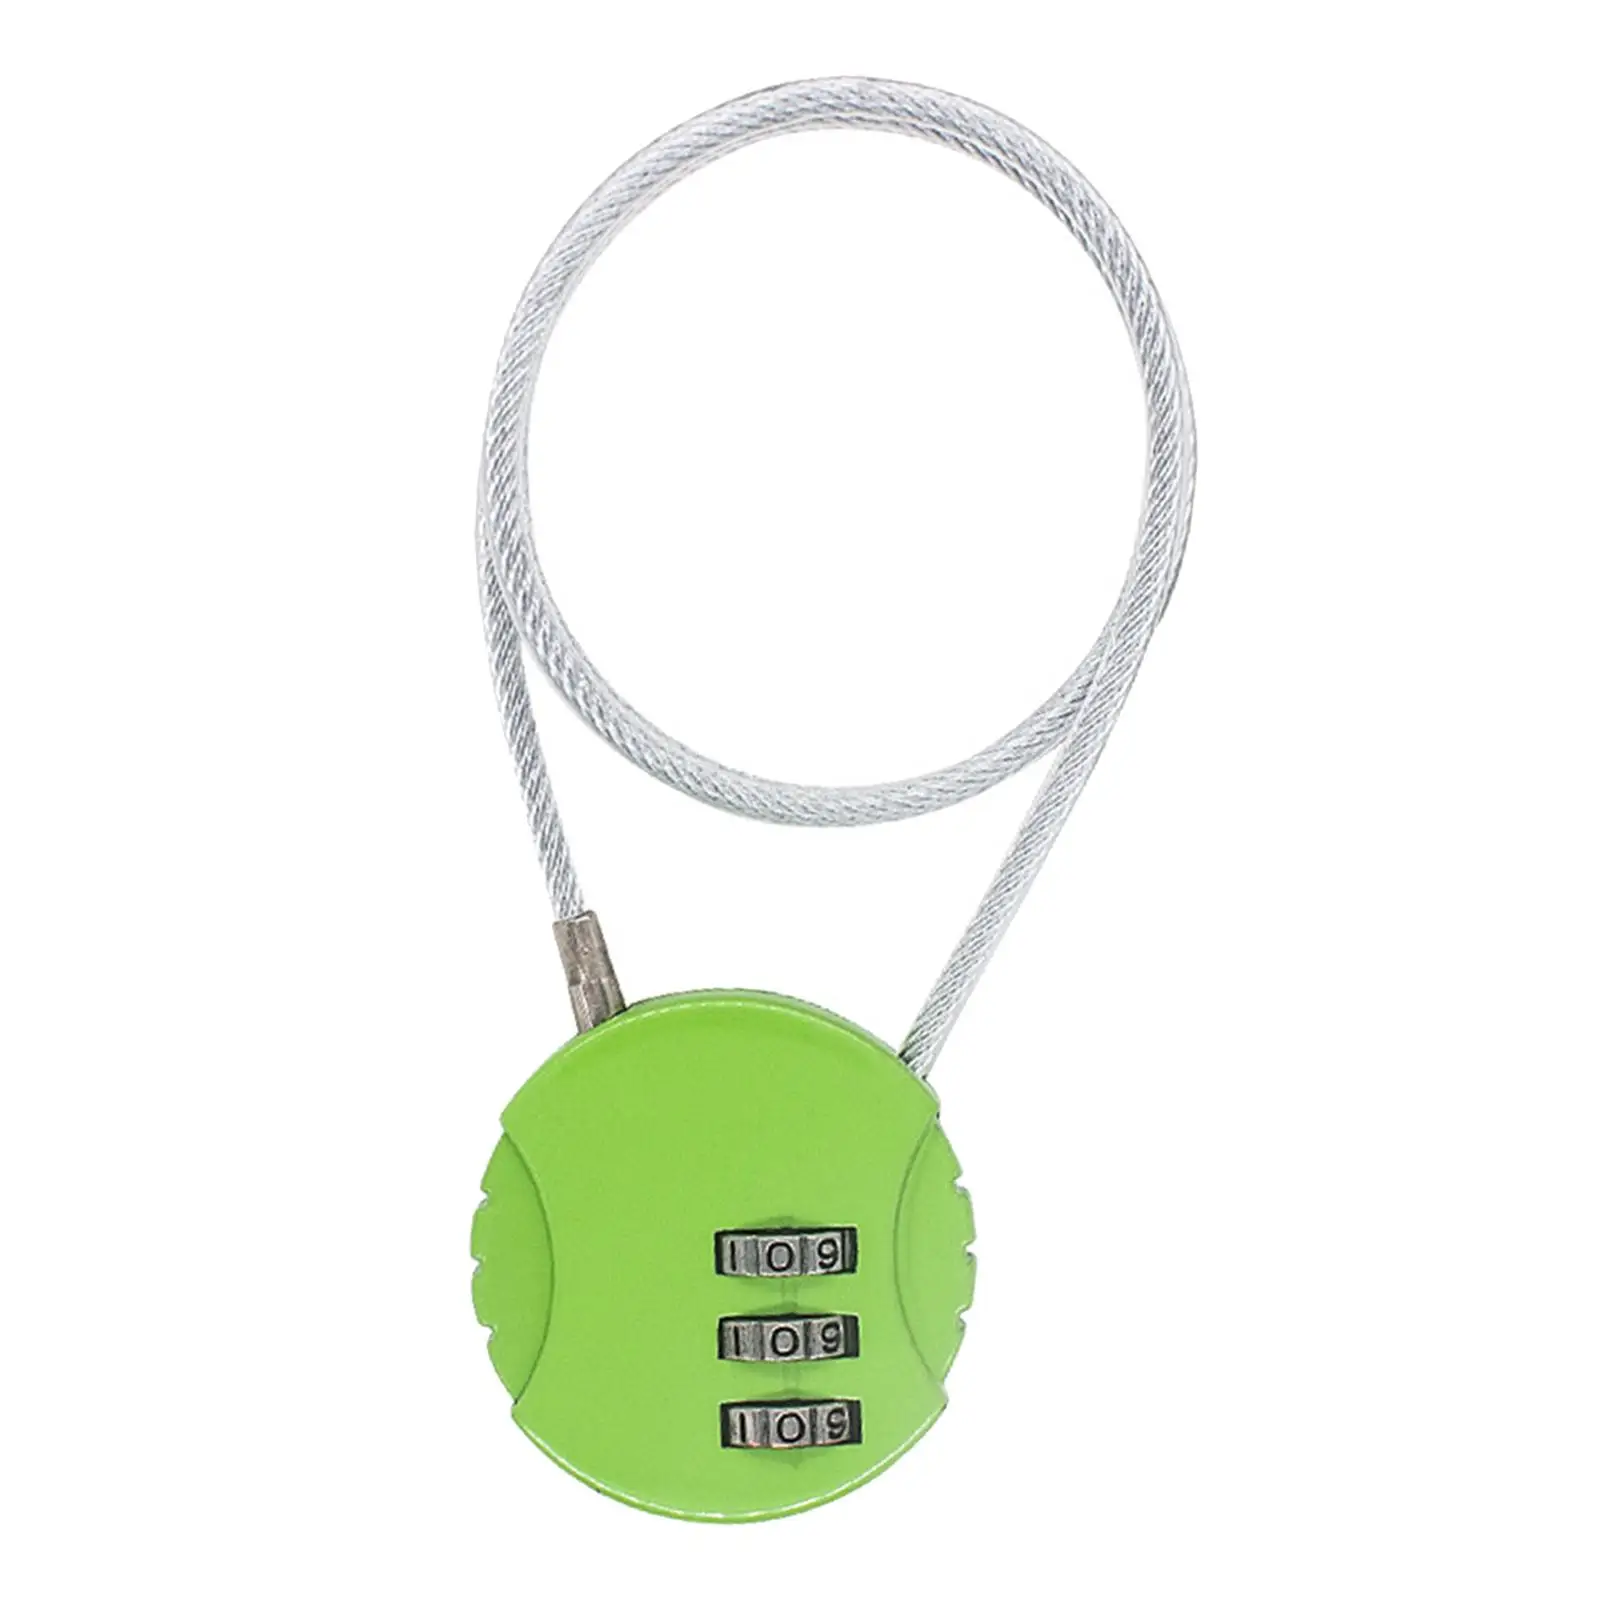 Helmet Lock Cycling lock Portable 3 Digit Resettable Mini Bicycle Locks for Suitcase Stroller Travel Luggage Locker